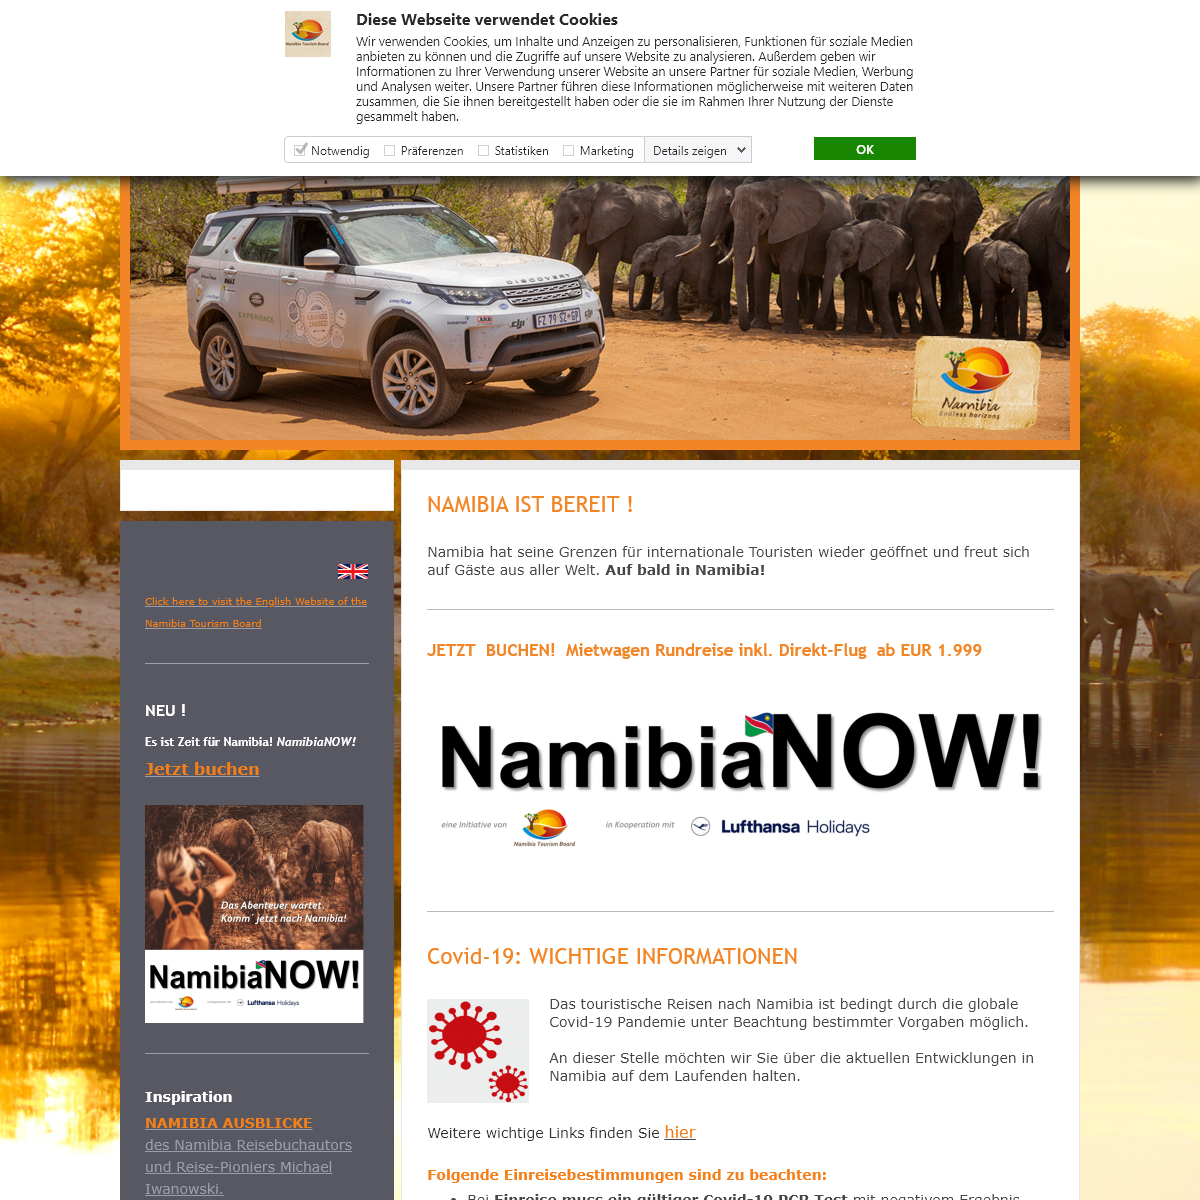 A complete backup of namibia-tourism.com